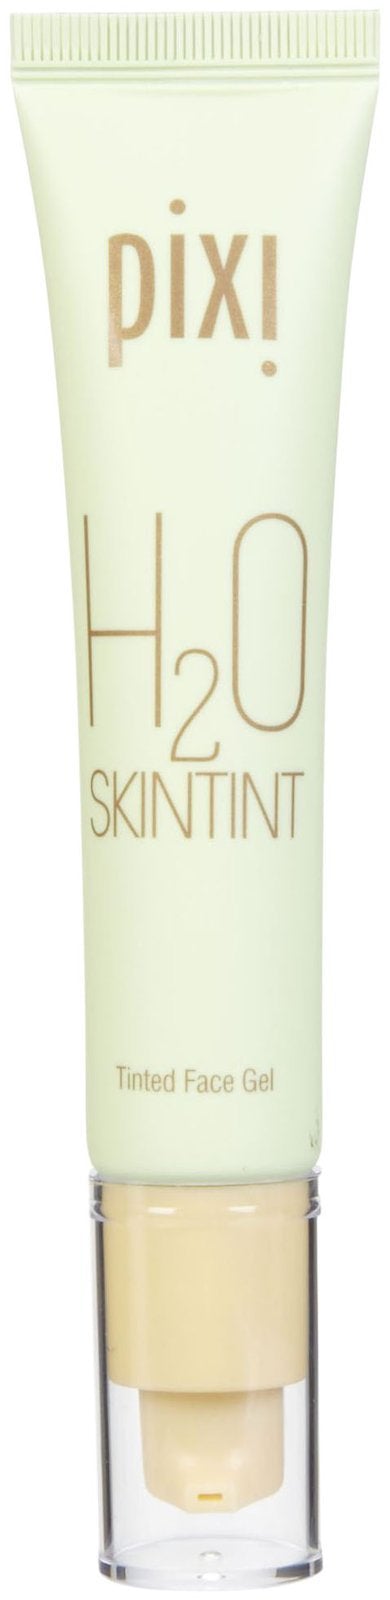 [Australia] - Pixi H2o Skintint Tinted Faced Gel No.1 Cream 